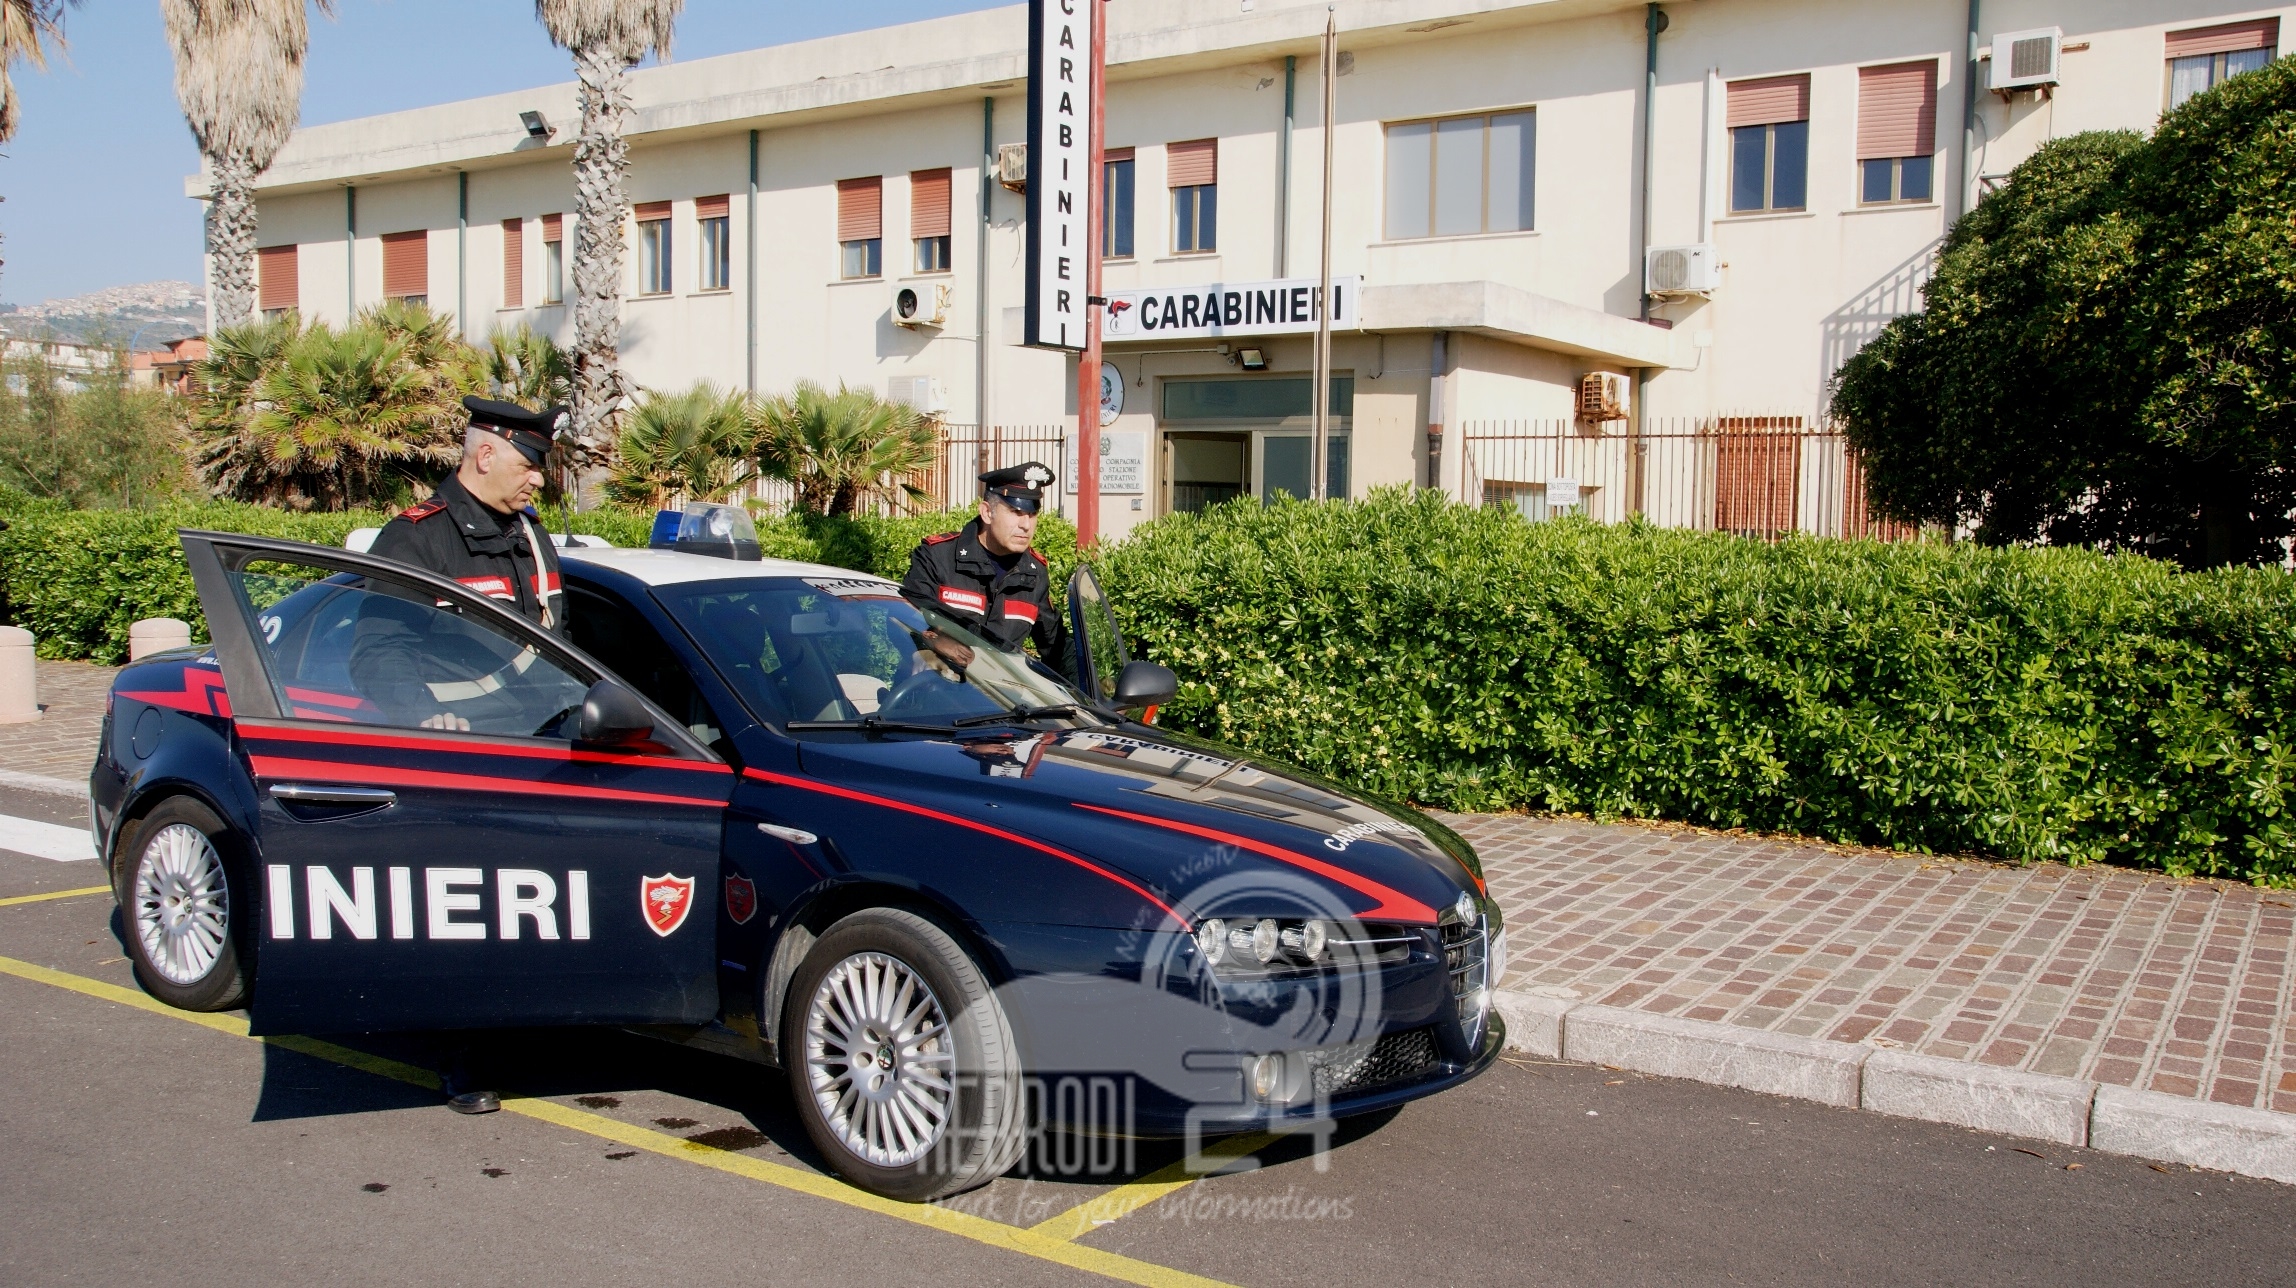 Torrenova – Derubava gli anziani zii, arrestato dai Carabinieri